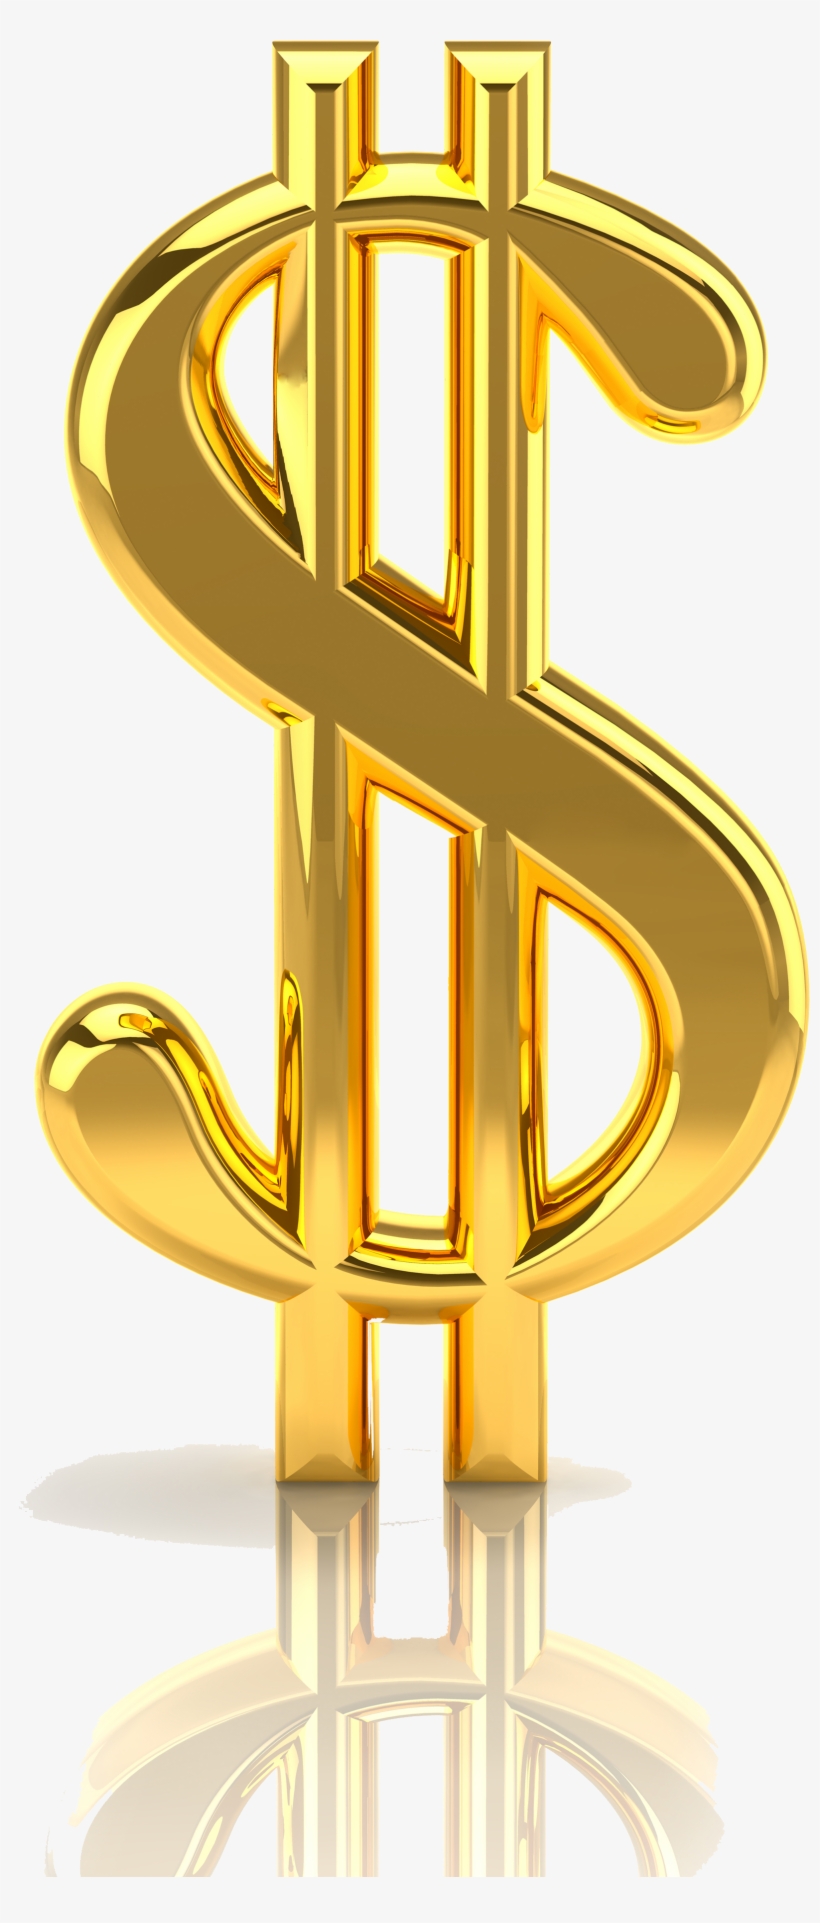 Gold Dollar Png File - Dollar Sign In Gold, transparent png #69025